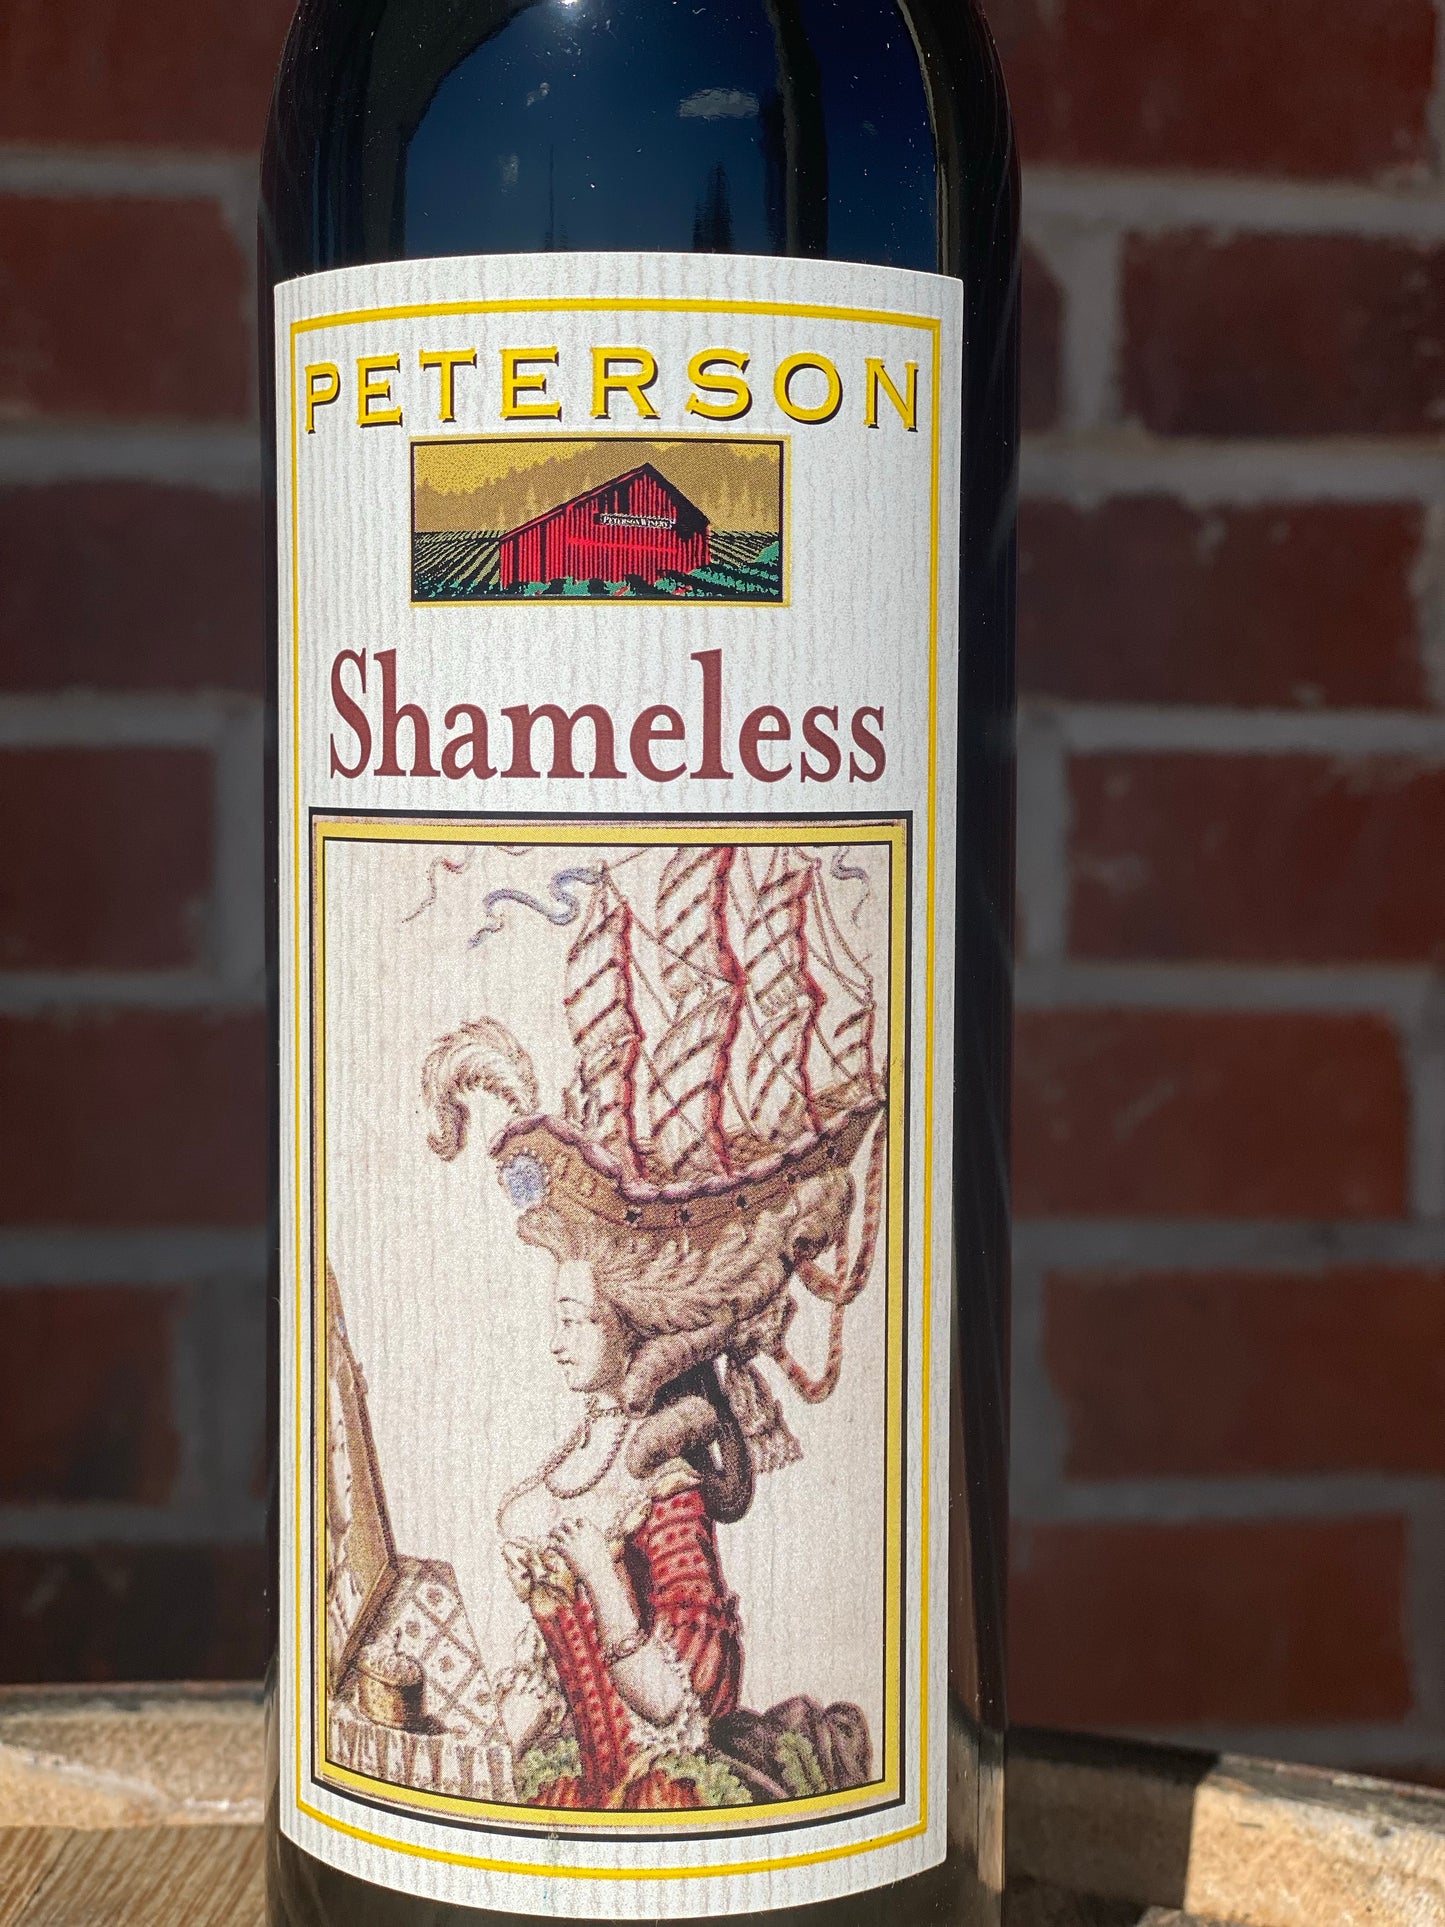 Shameless Red Blend (Peterson)